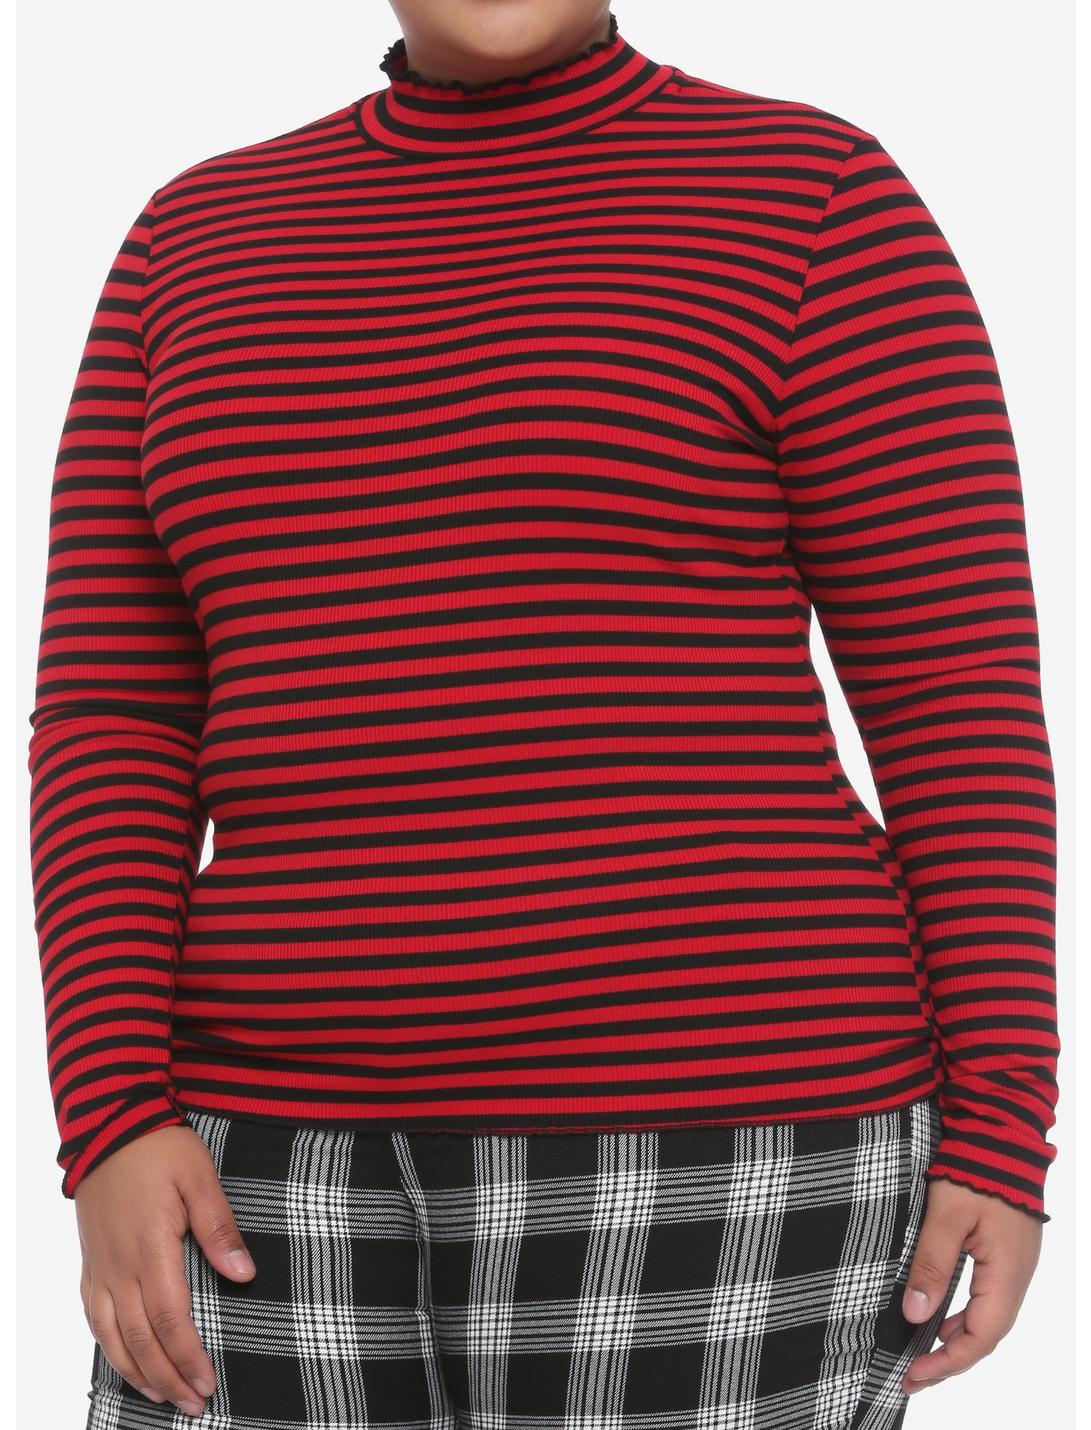 Black & Red Stripe Mock Neck Girls Long-Sleeve Top Plus Size, STRIPES - RED, hi-res